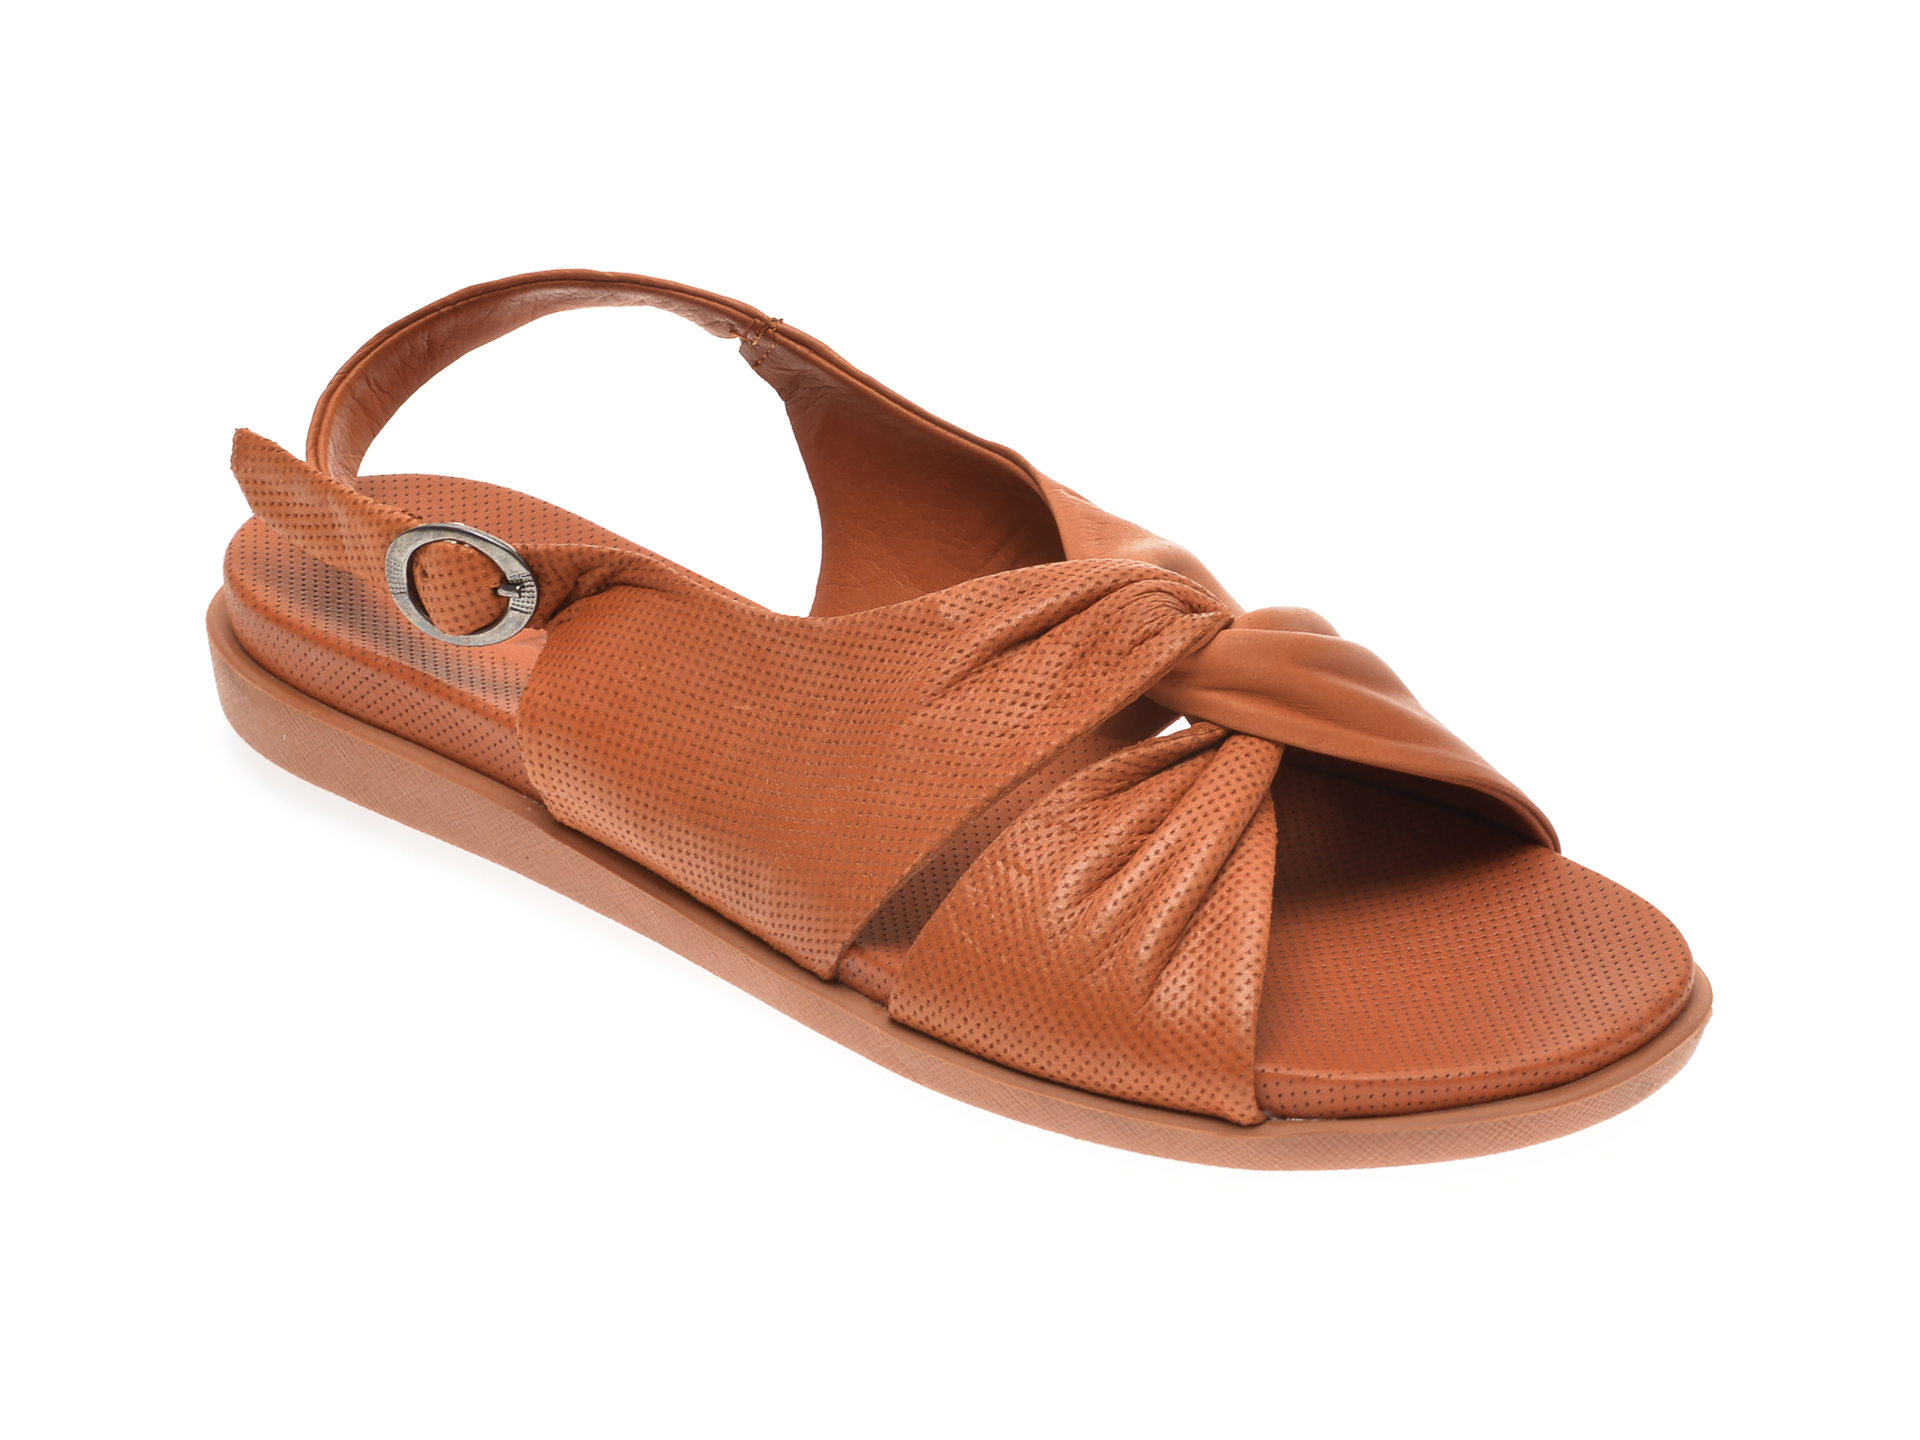 Sandale BABOOS maro, 1405, din piele naturala imagine otter.ro